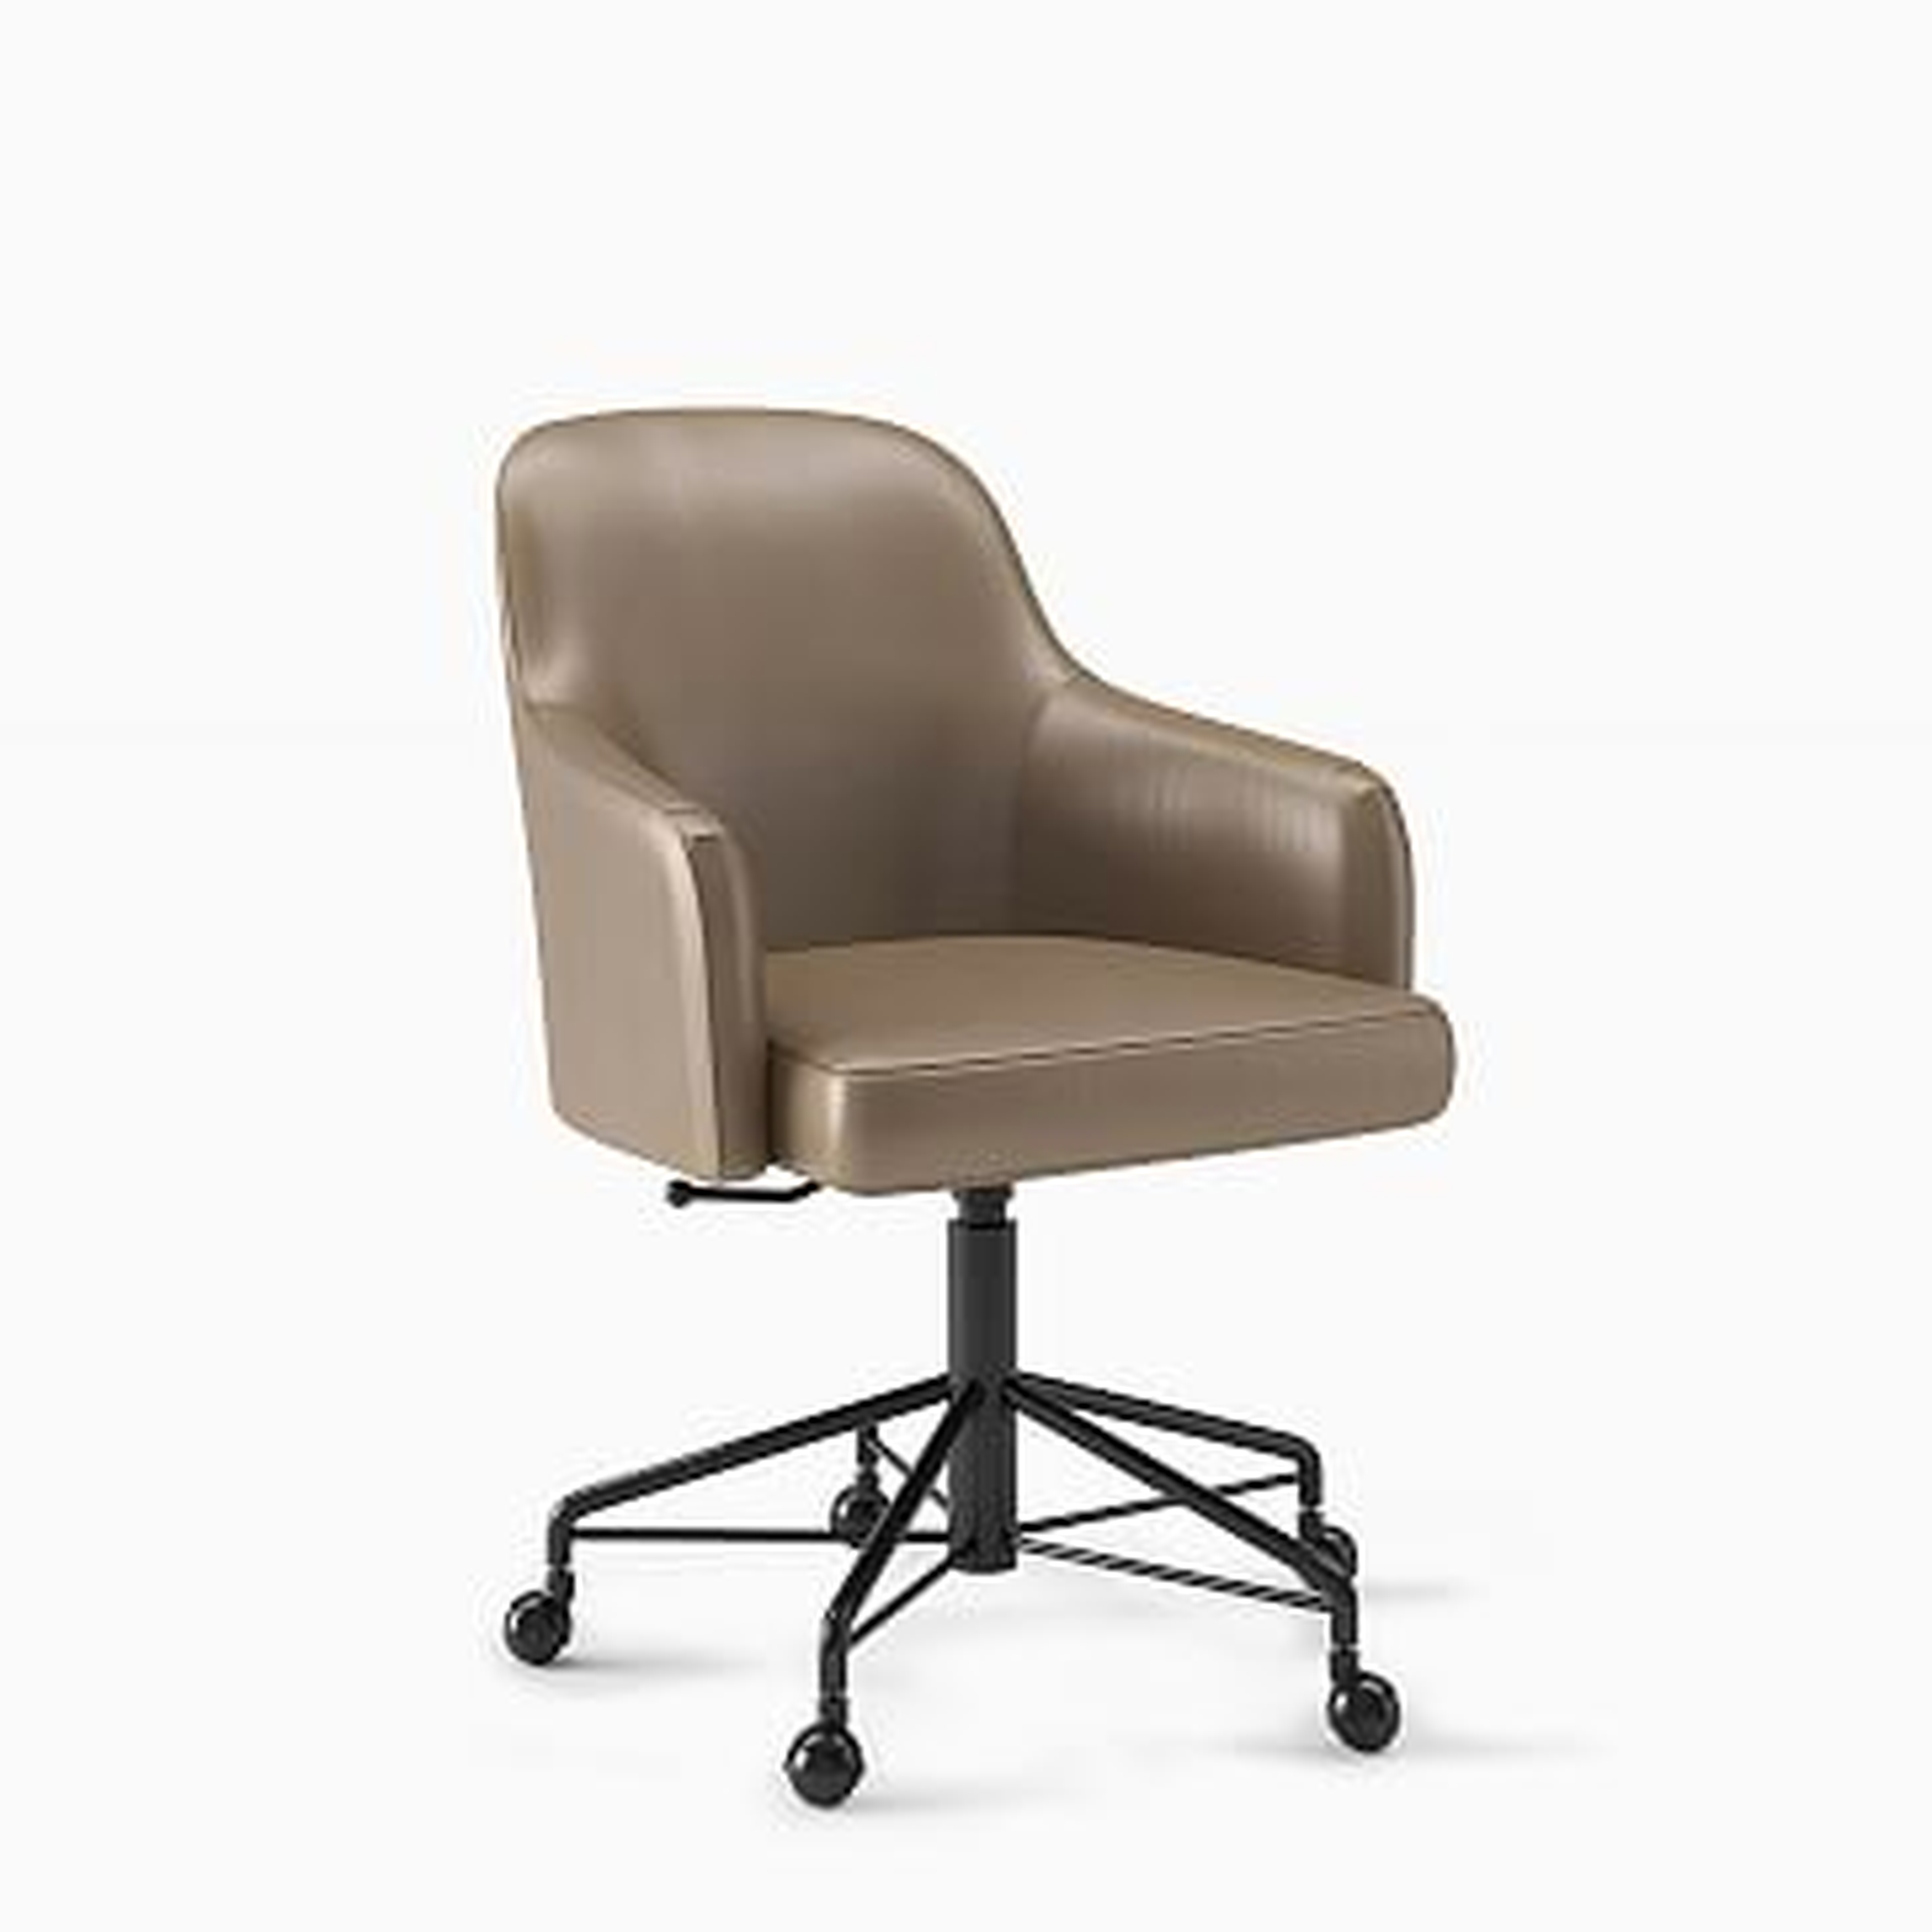 Springhill Suites Saddle Desk Chair - Contract Grade - West Elm